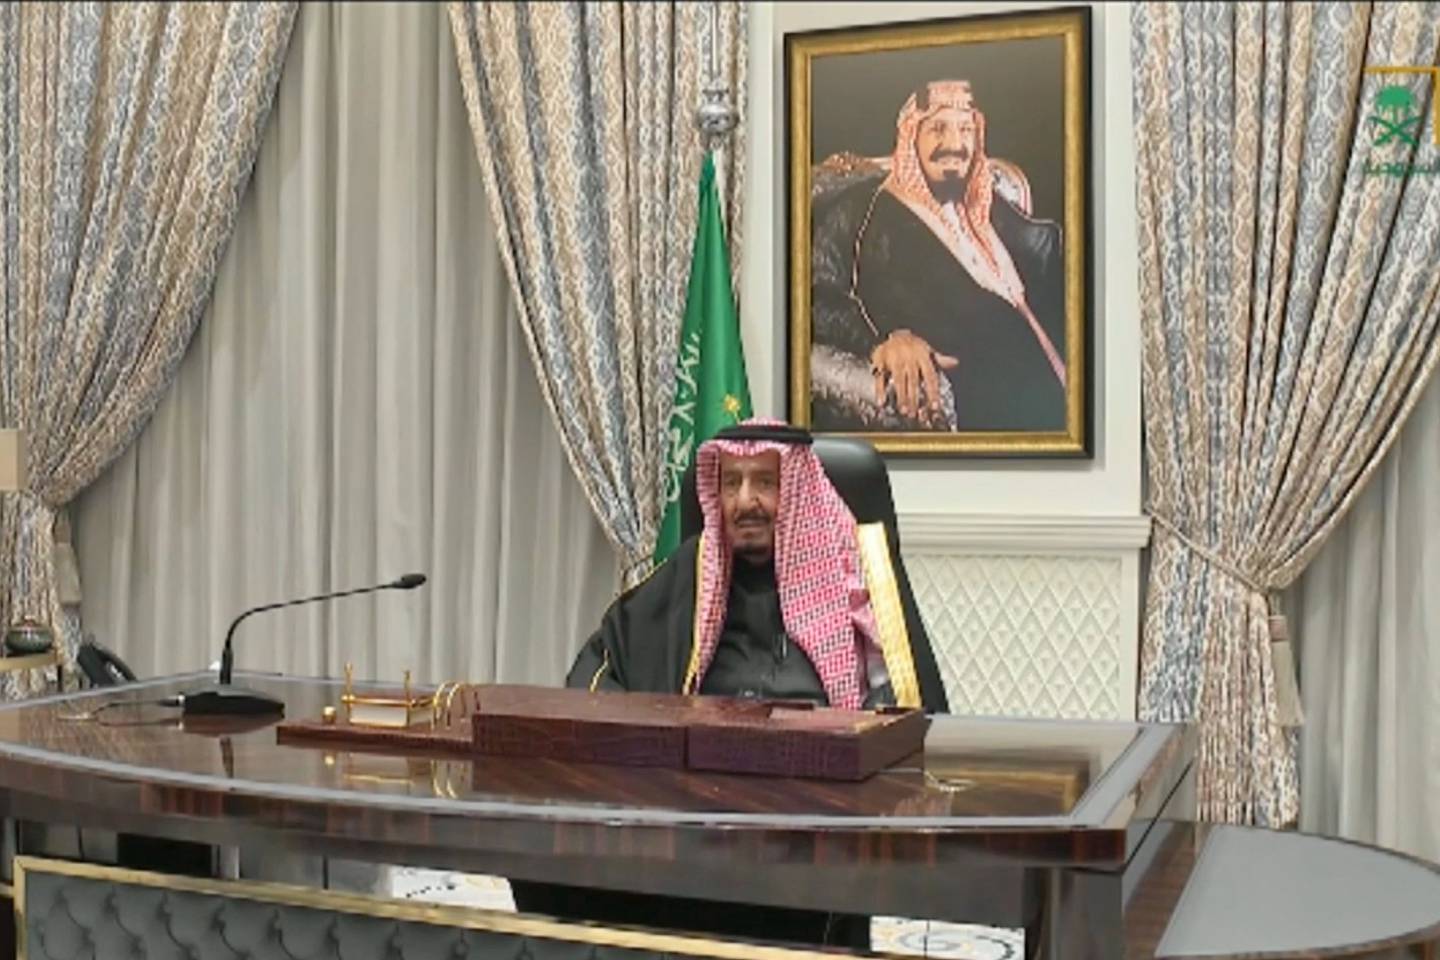 Saudi Arabian King Salman bin Abdulaziz during his annual speech on December 30, 2021. A portrait of his father, Abdulaziz, hangs behind him. Photo: Saudi TV / AFP